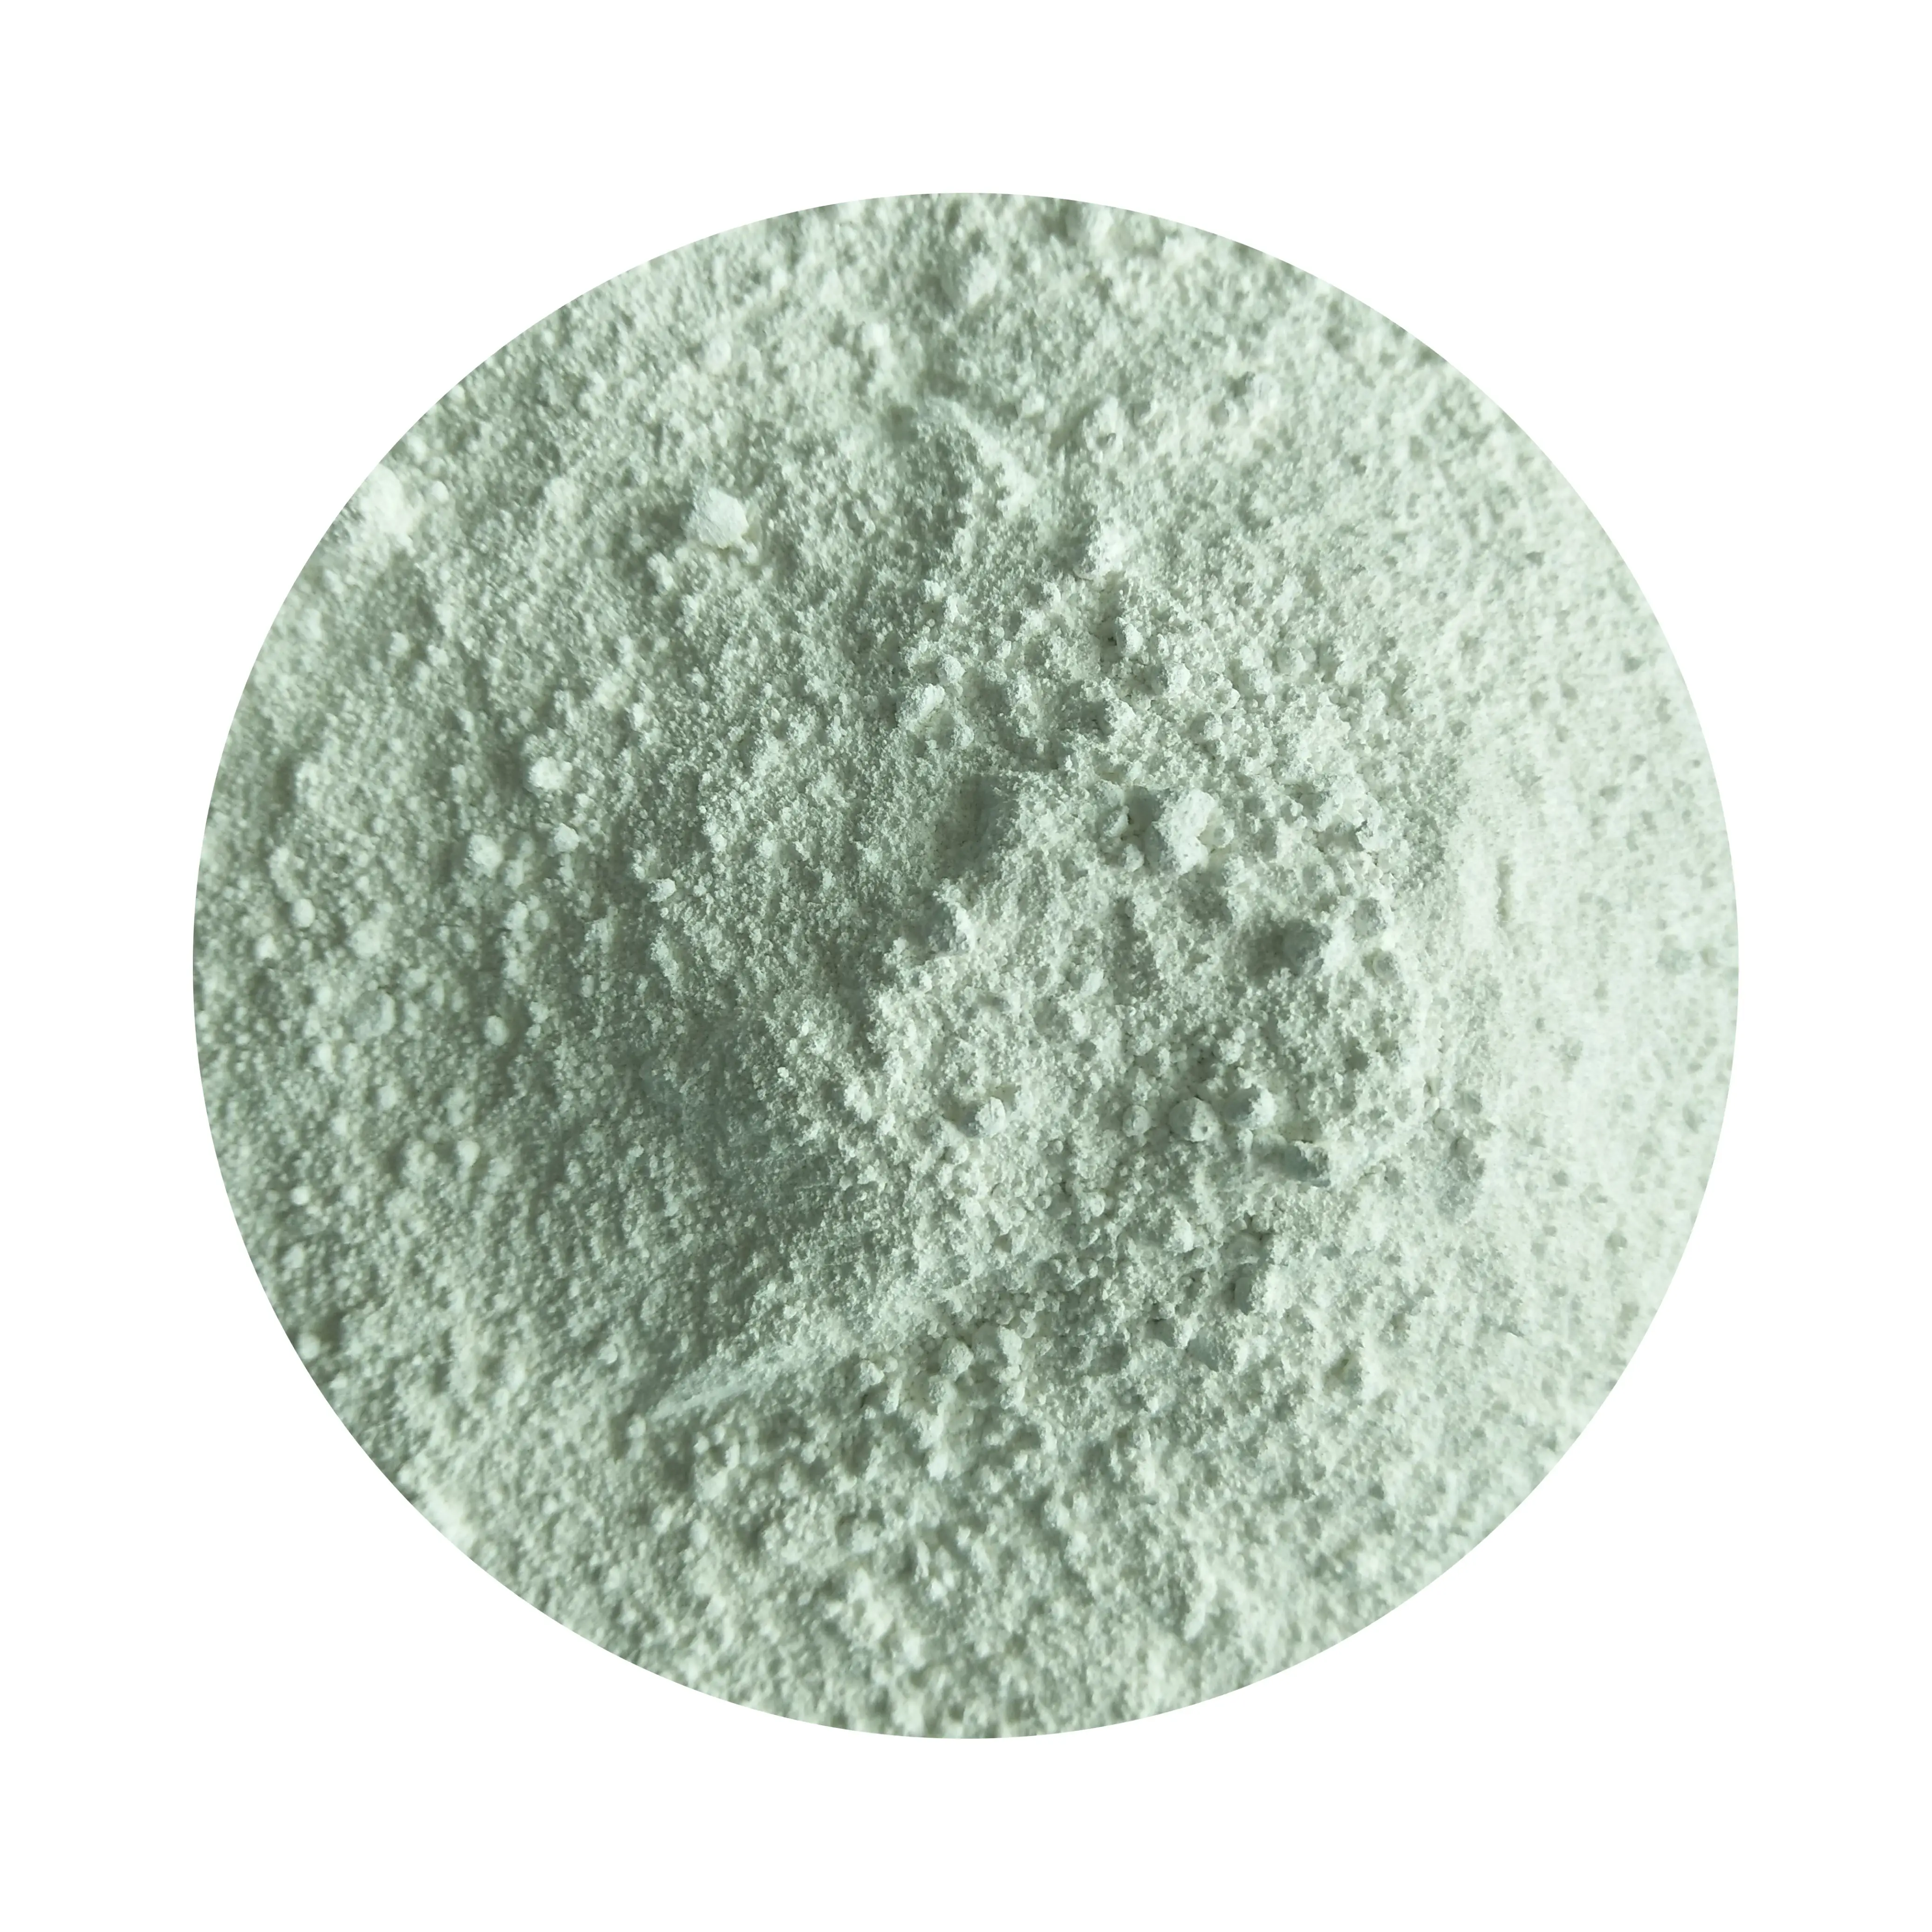 Beli harga pabrik Cina Rutile Anatase Grade Titanium dioksida Tio2 bubuk pigmen untuk pasta Filter cat tinta putih